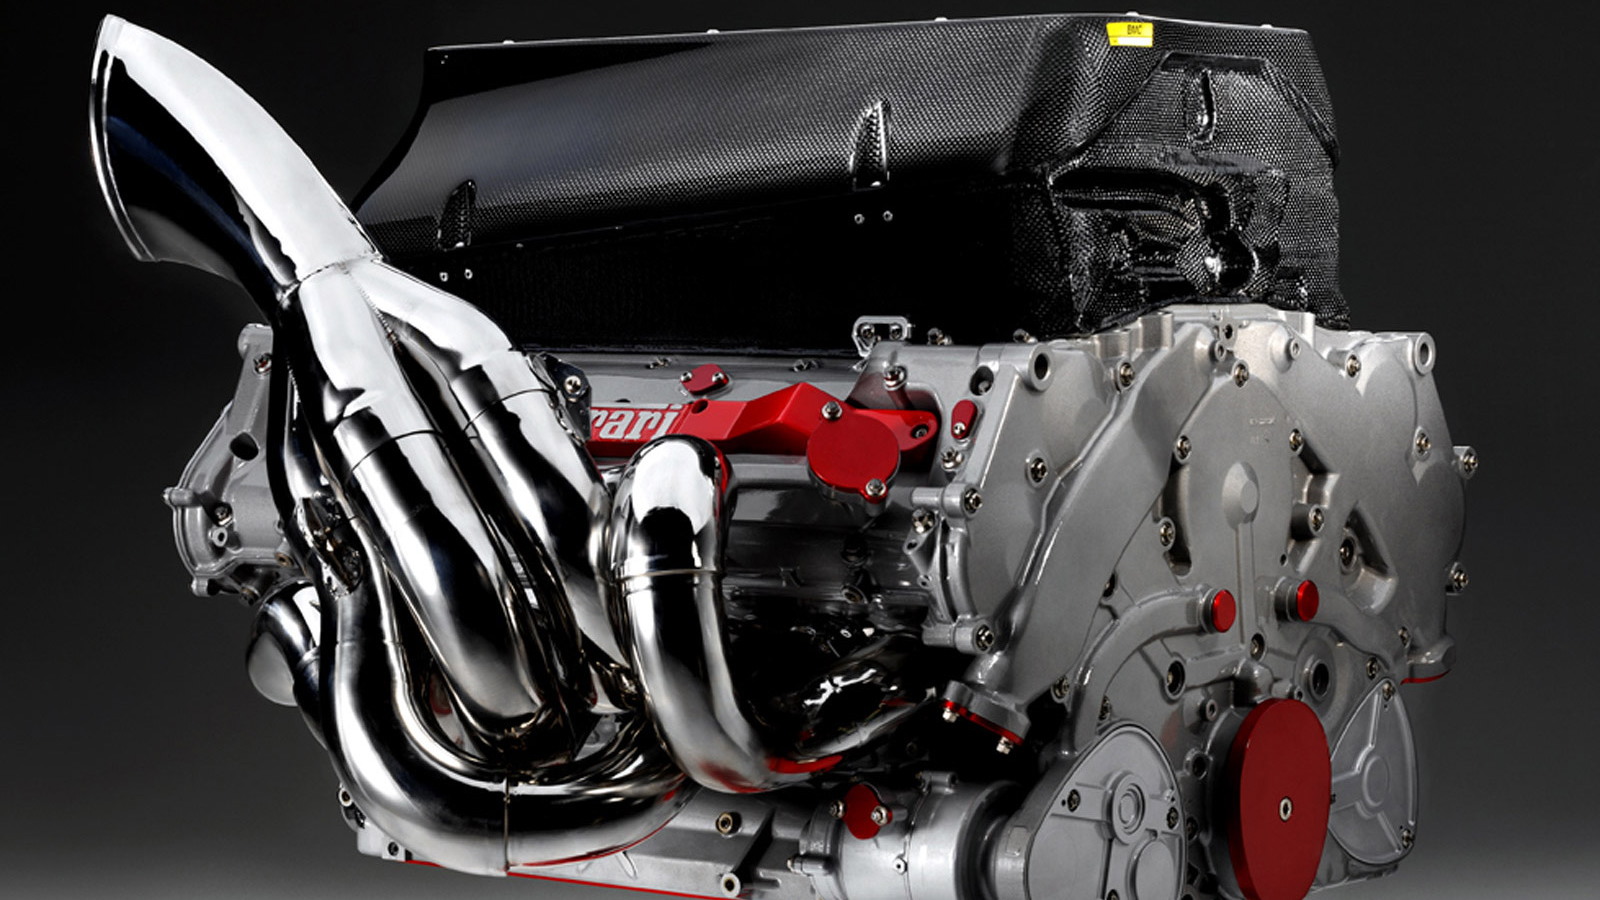 V-8 engine from Ferrari's 2008 Formula 1 race car